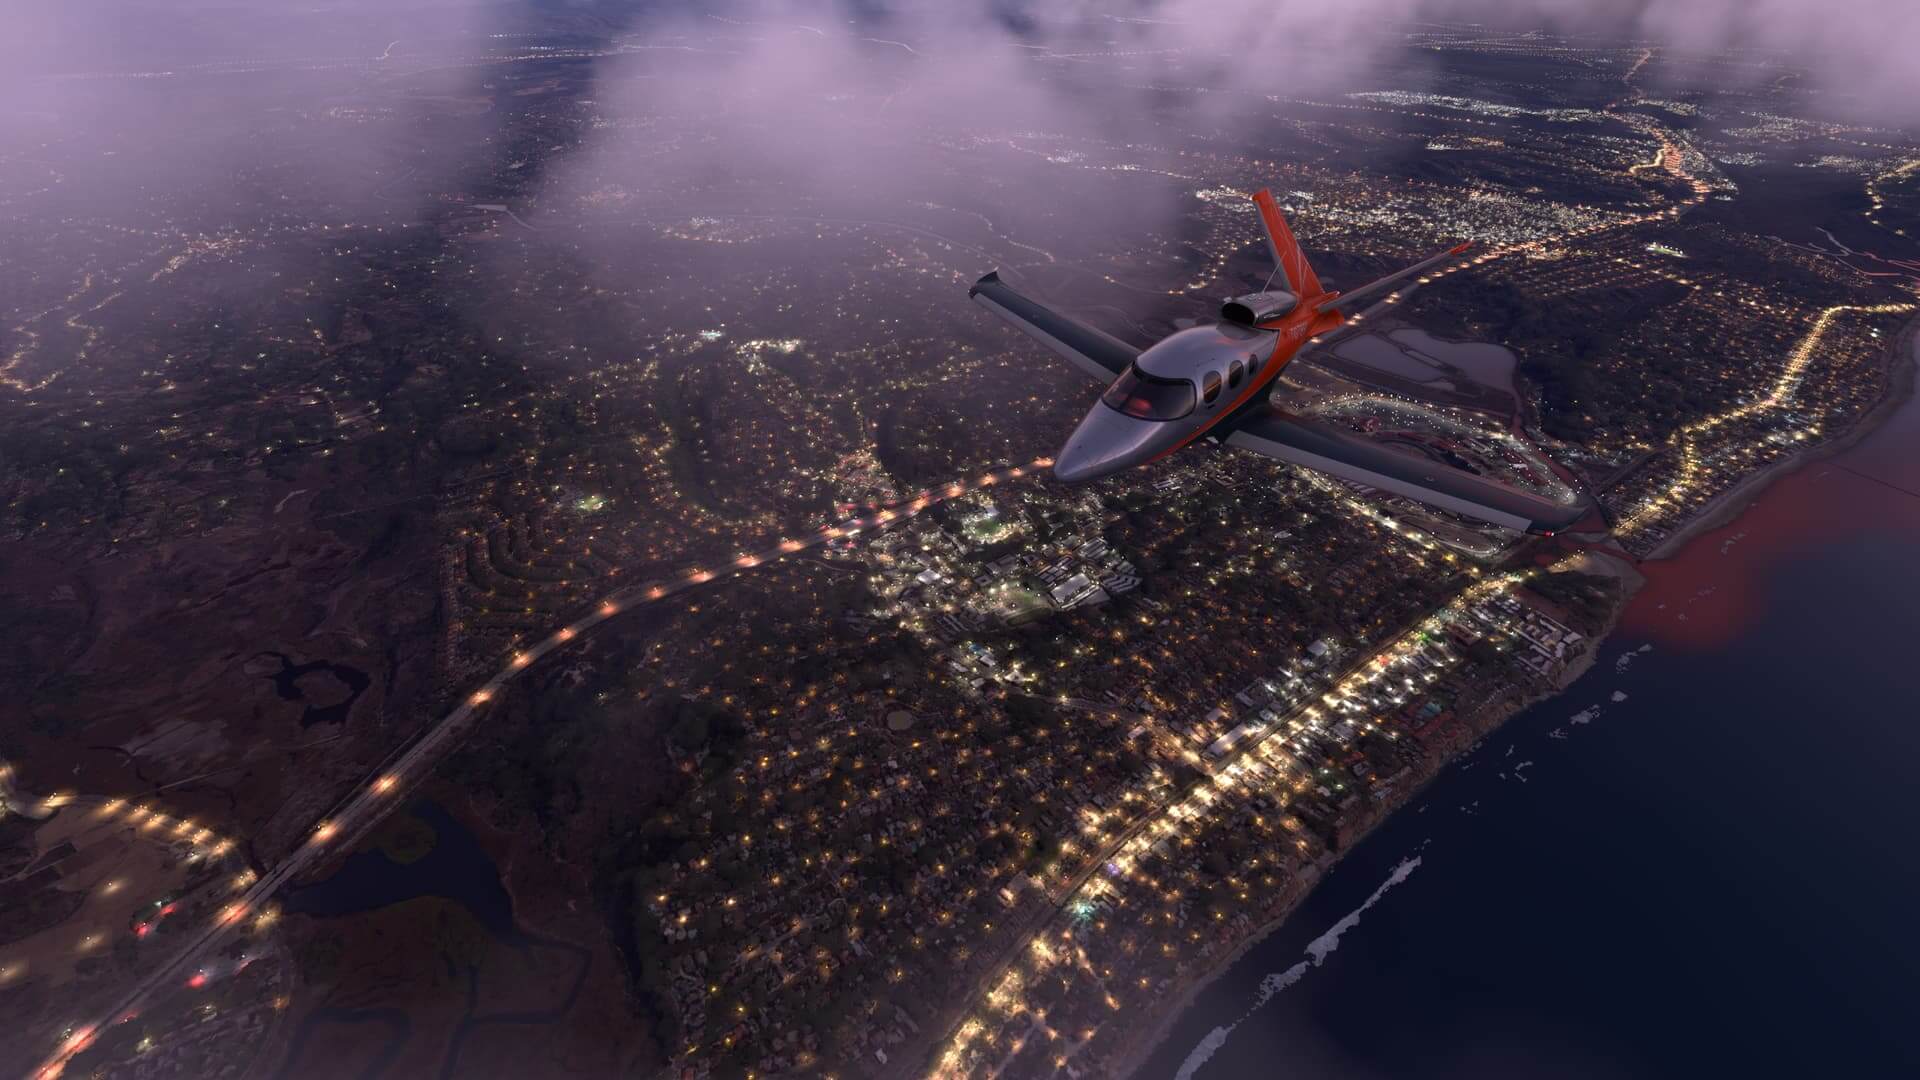 A plane flies over a city at dusk.